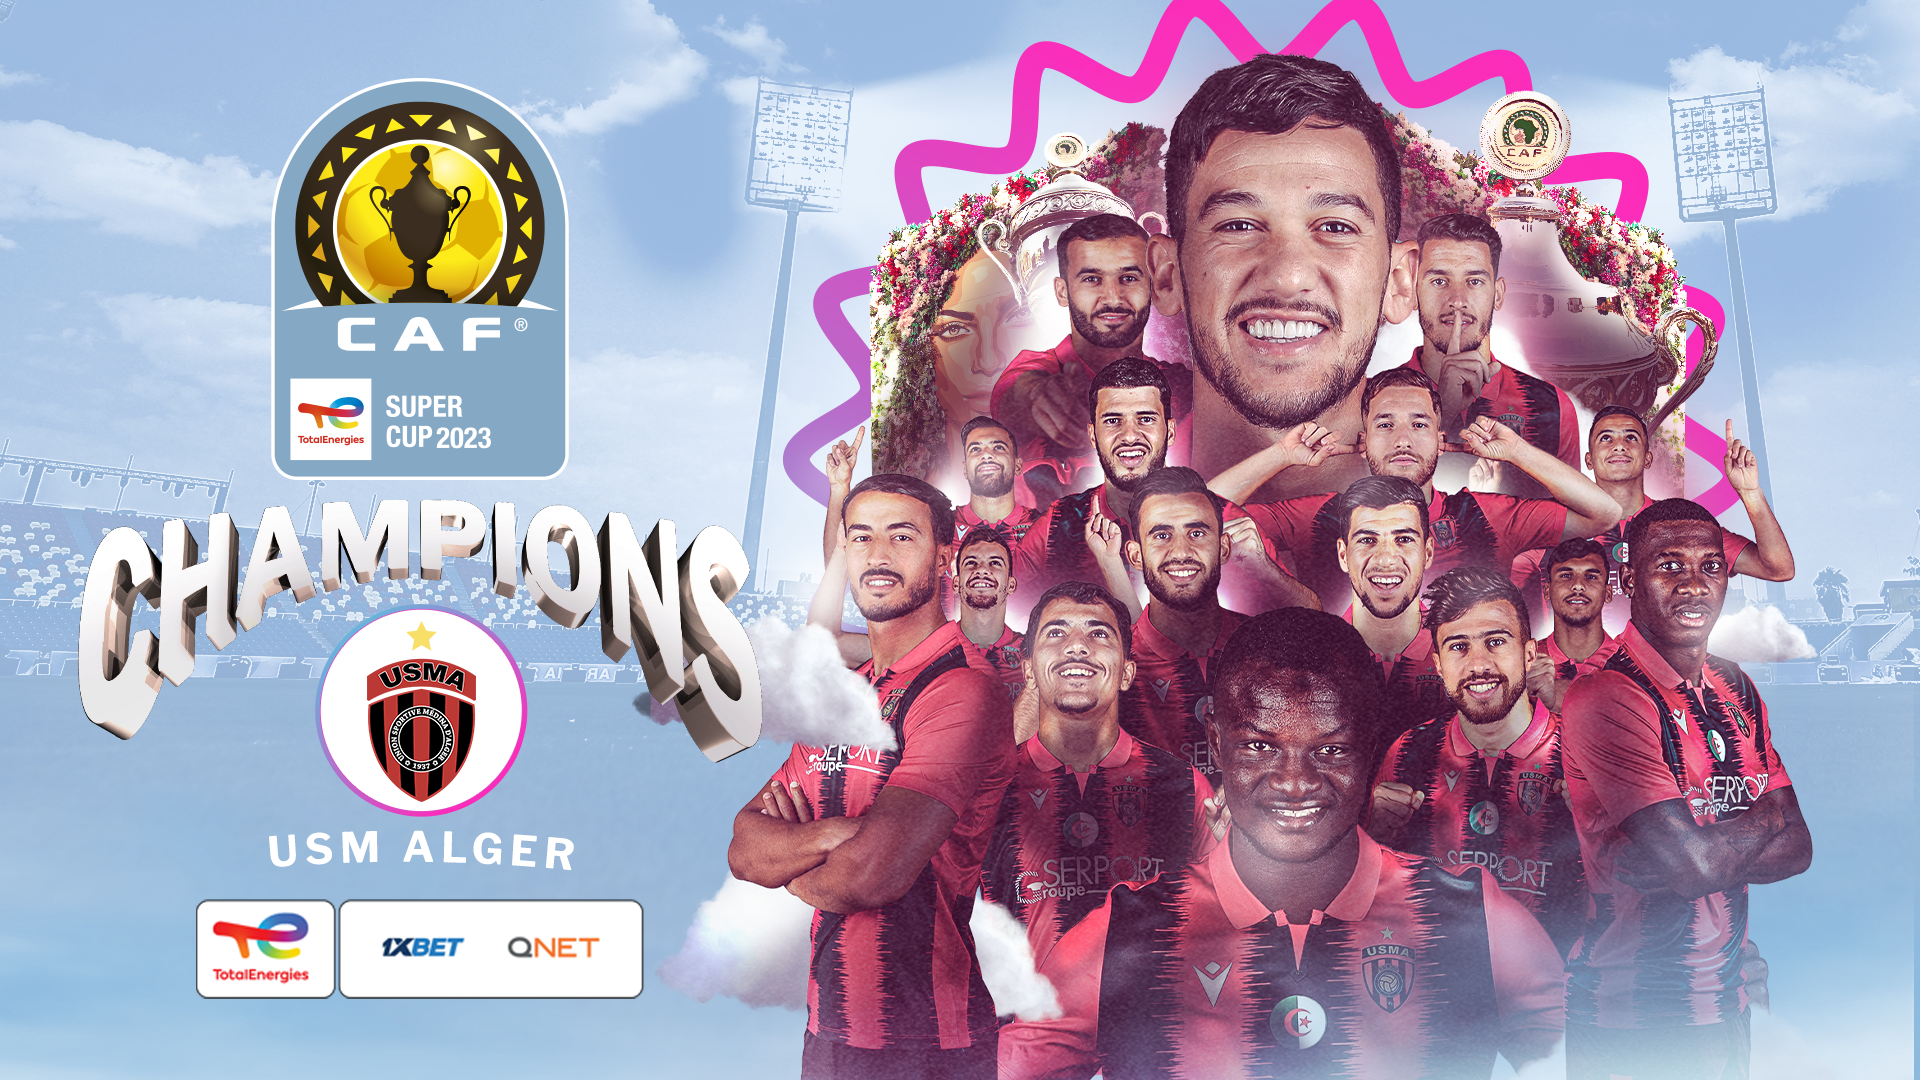 Superb USM Alger stun Al Ahly to clinch maiden CAF Super Cup